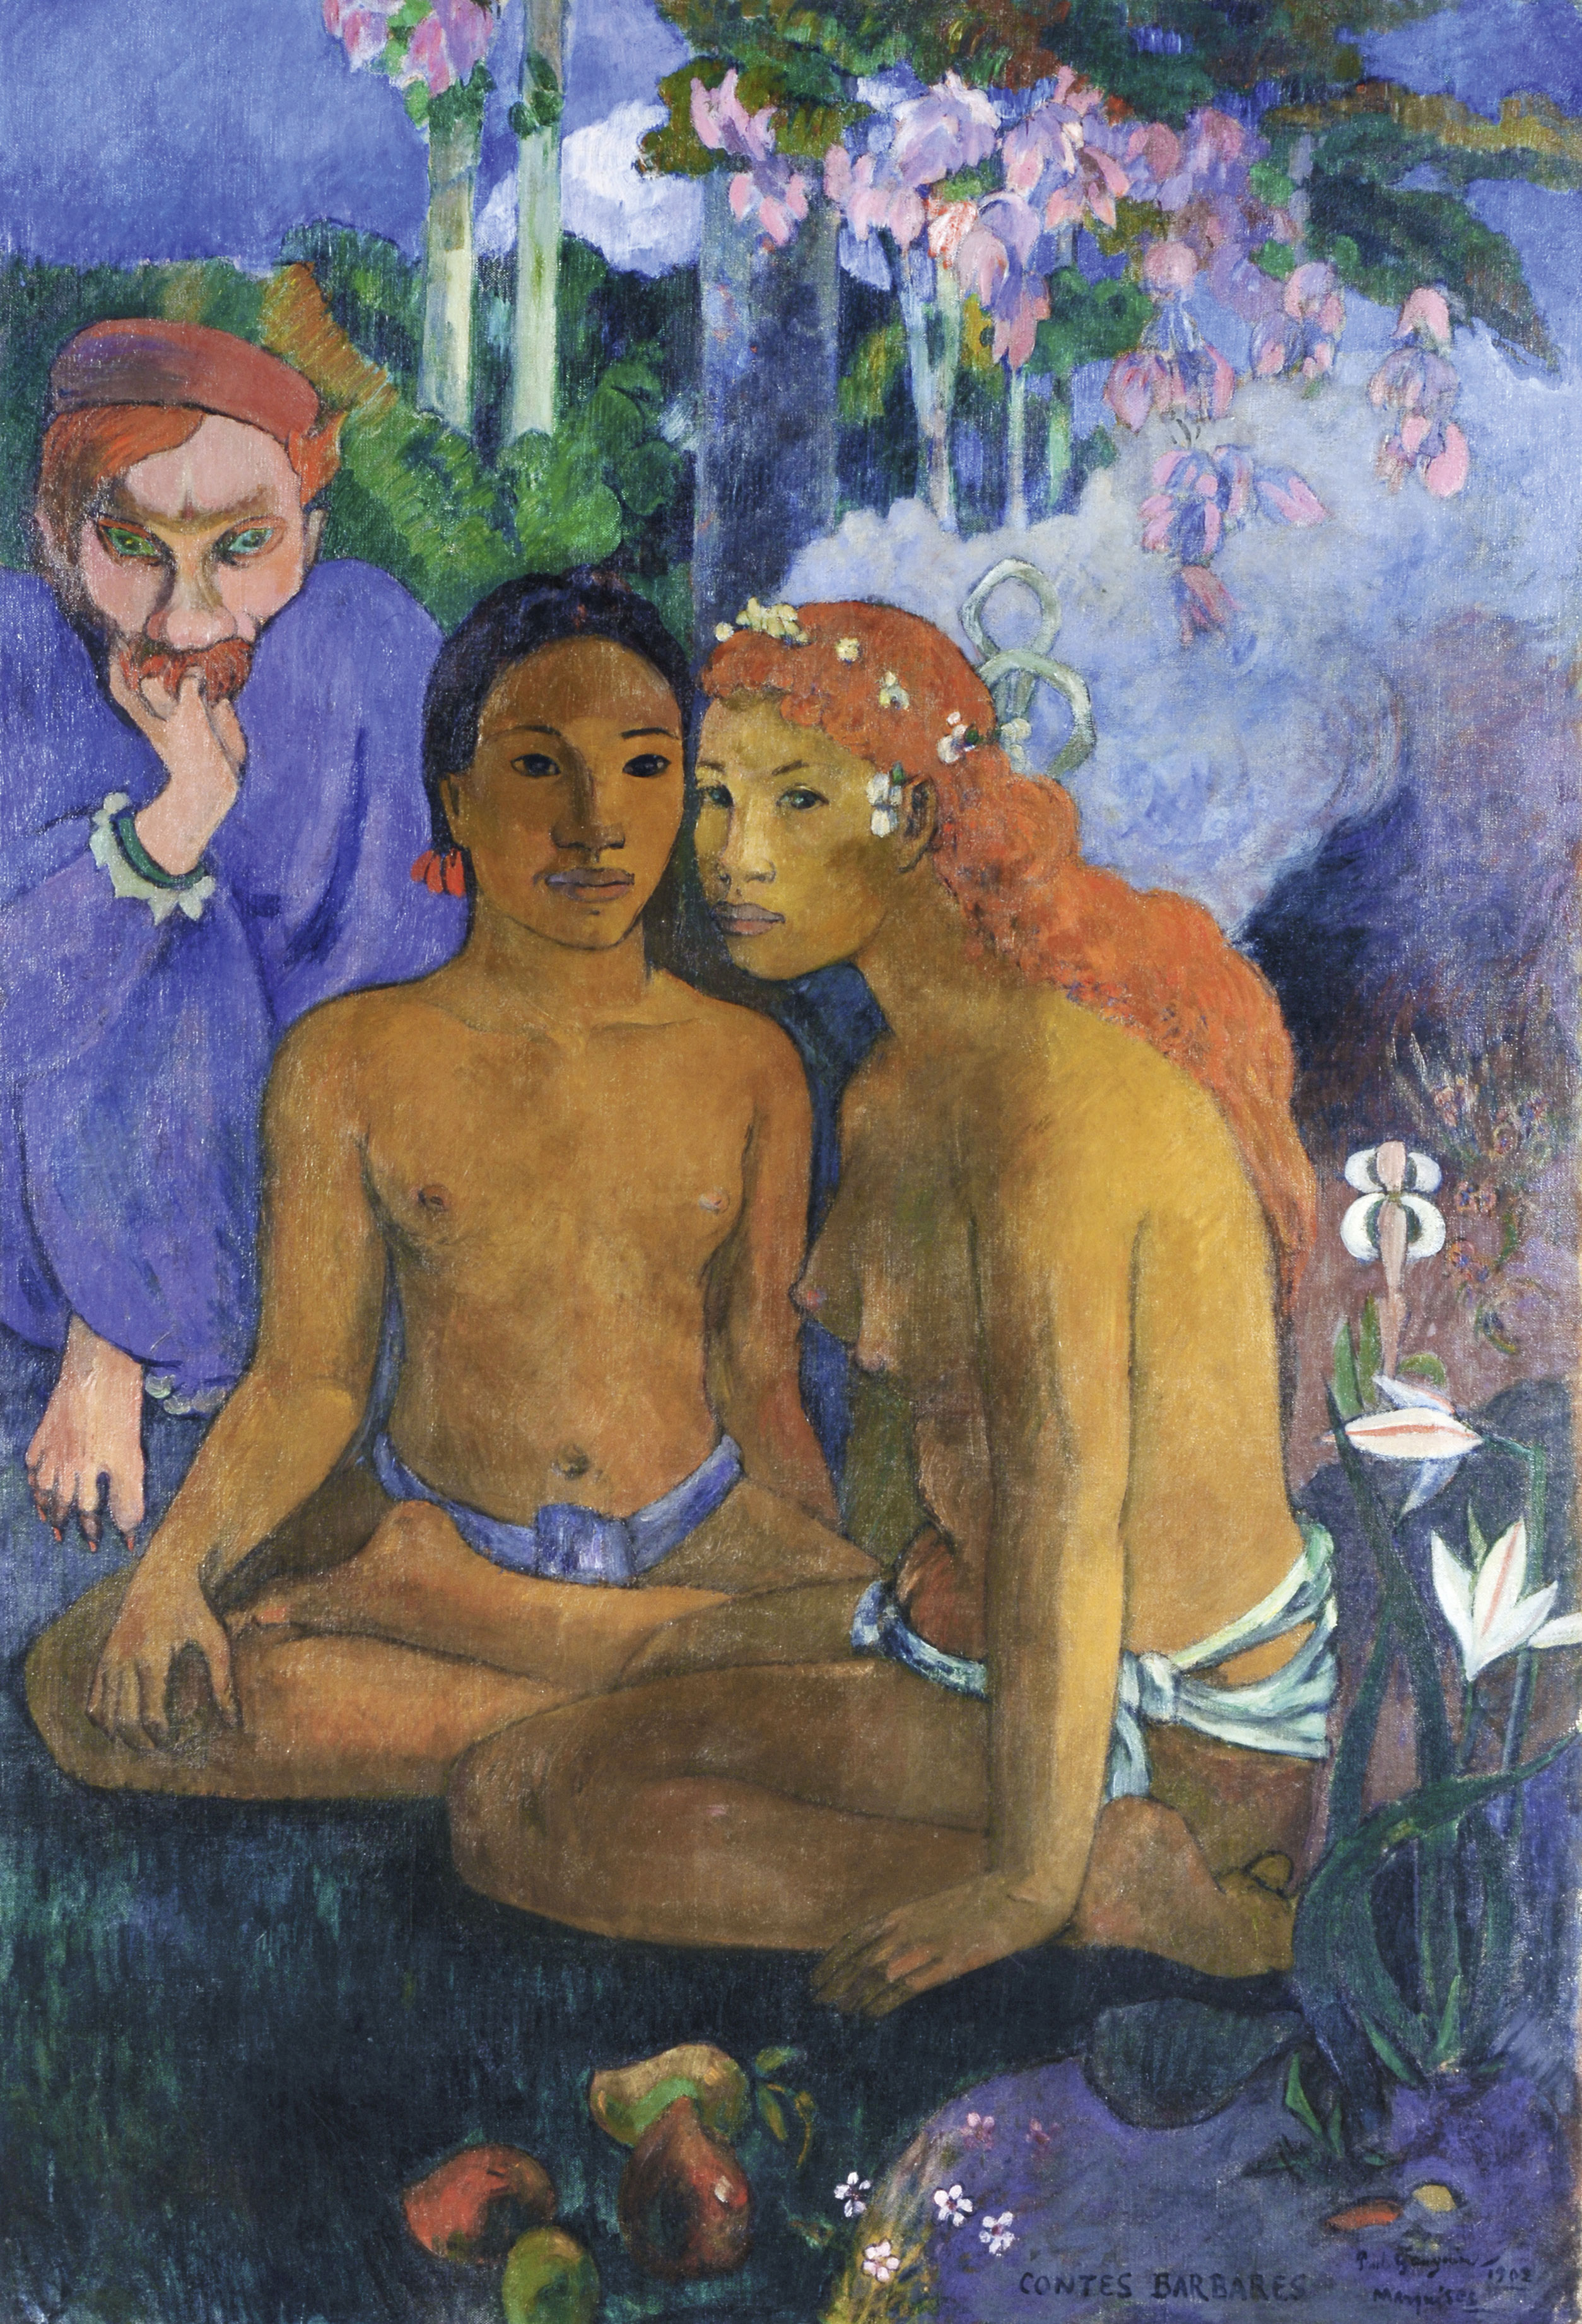 Fondation Beyeler - Gauguin Exhibition